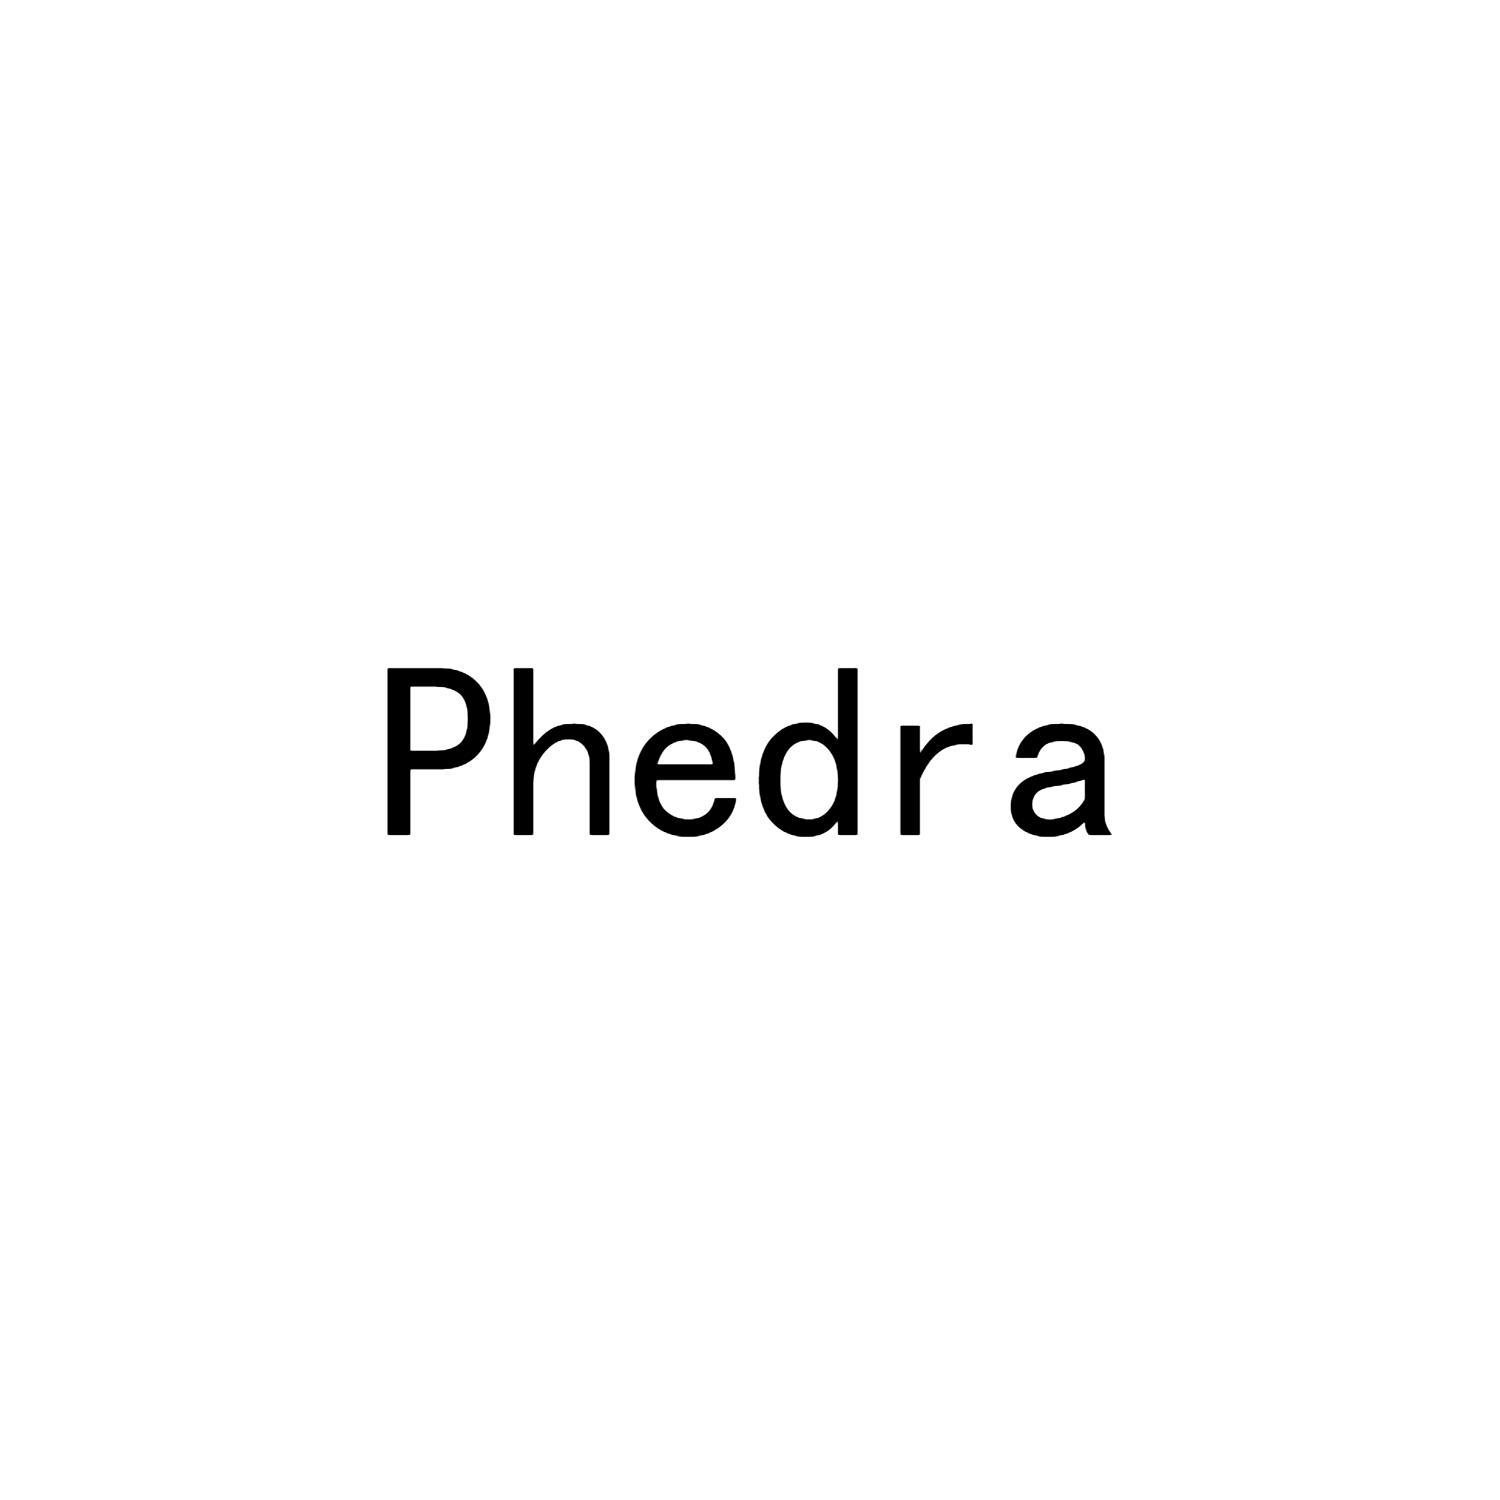 PHEDRA